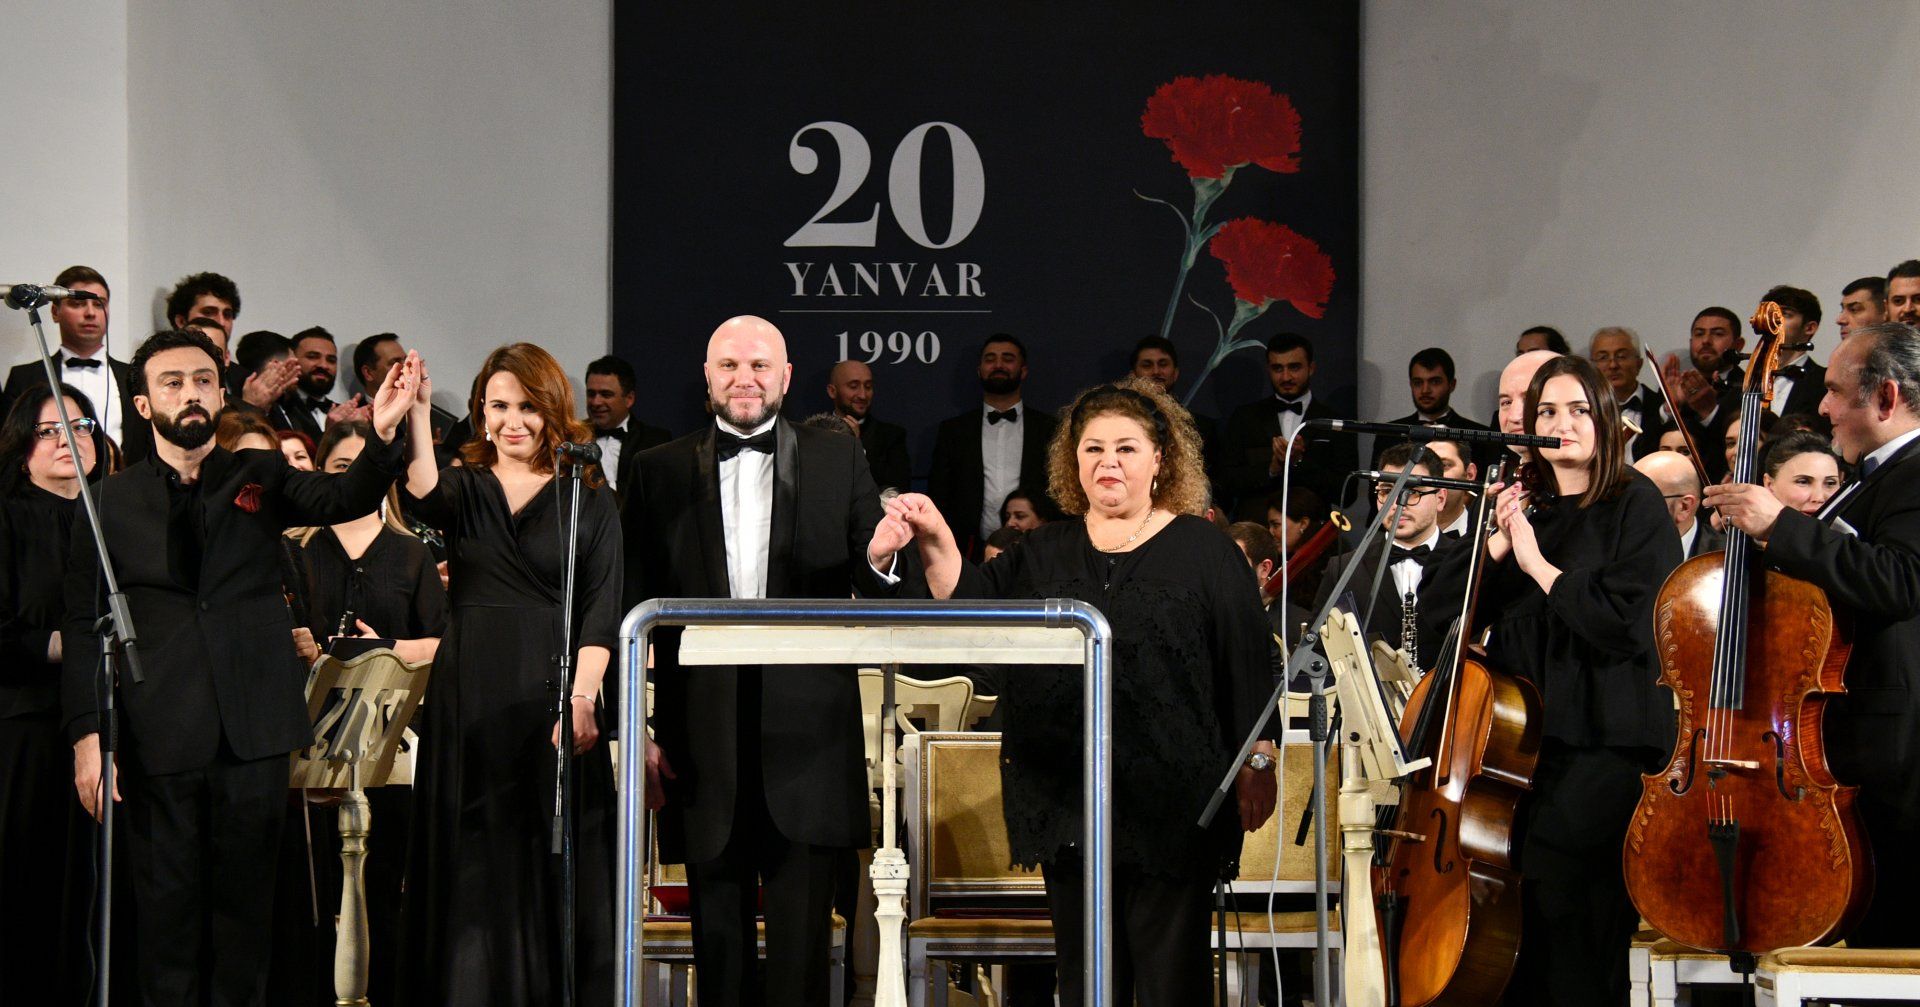 Philharmonic Hall pays tribute to January 20 victims [PHOTOS]